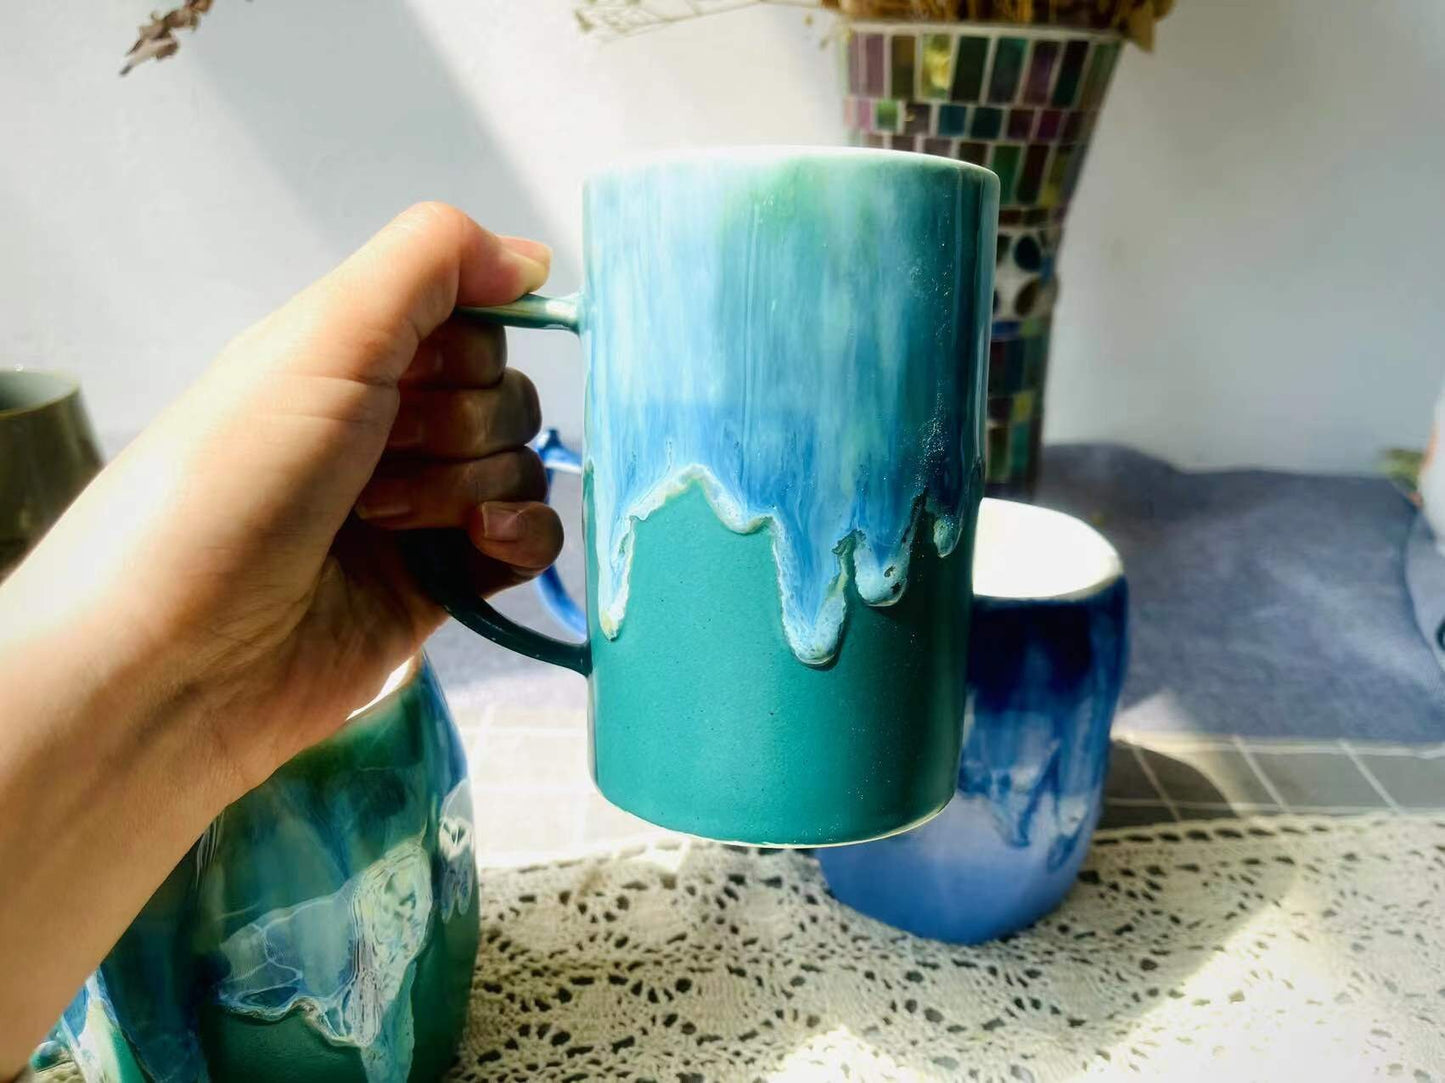 Colorful Ceramic Mug with Flowing Glaze, Brightly Colored Personalized Handmade Pottery Mug